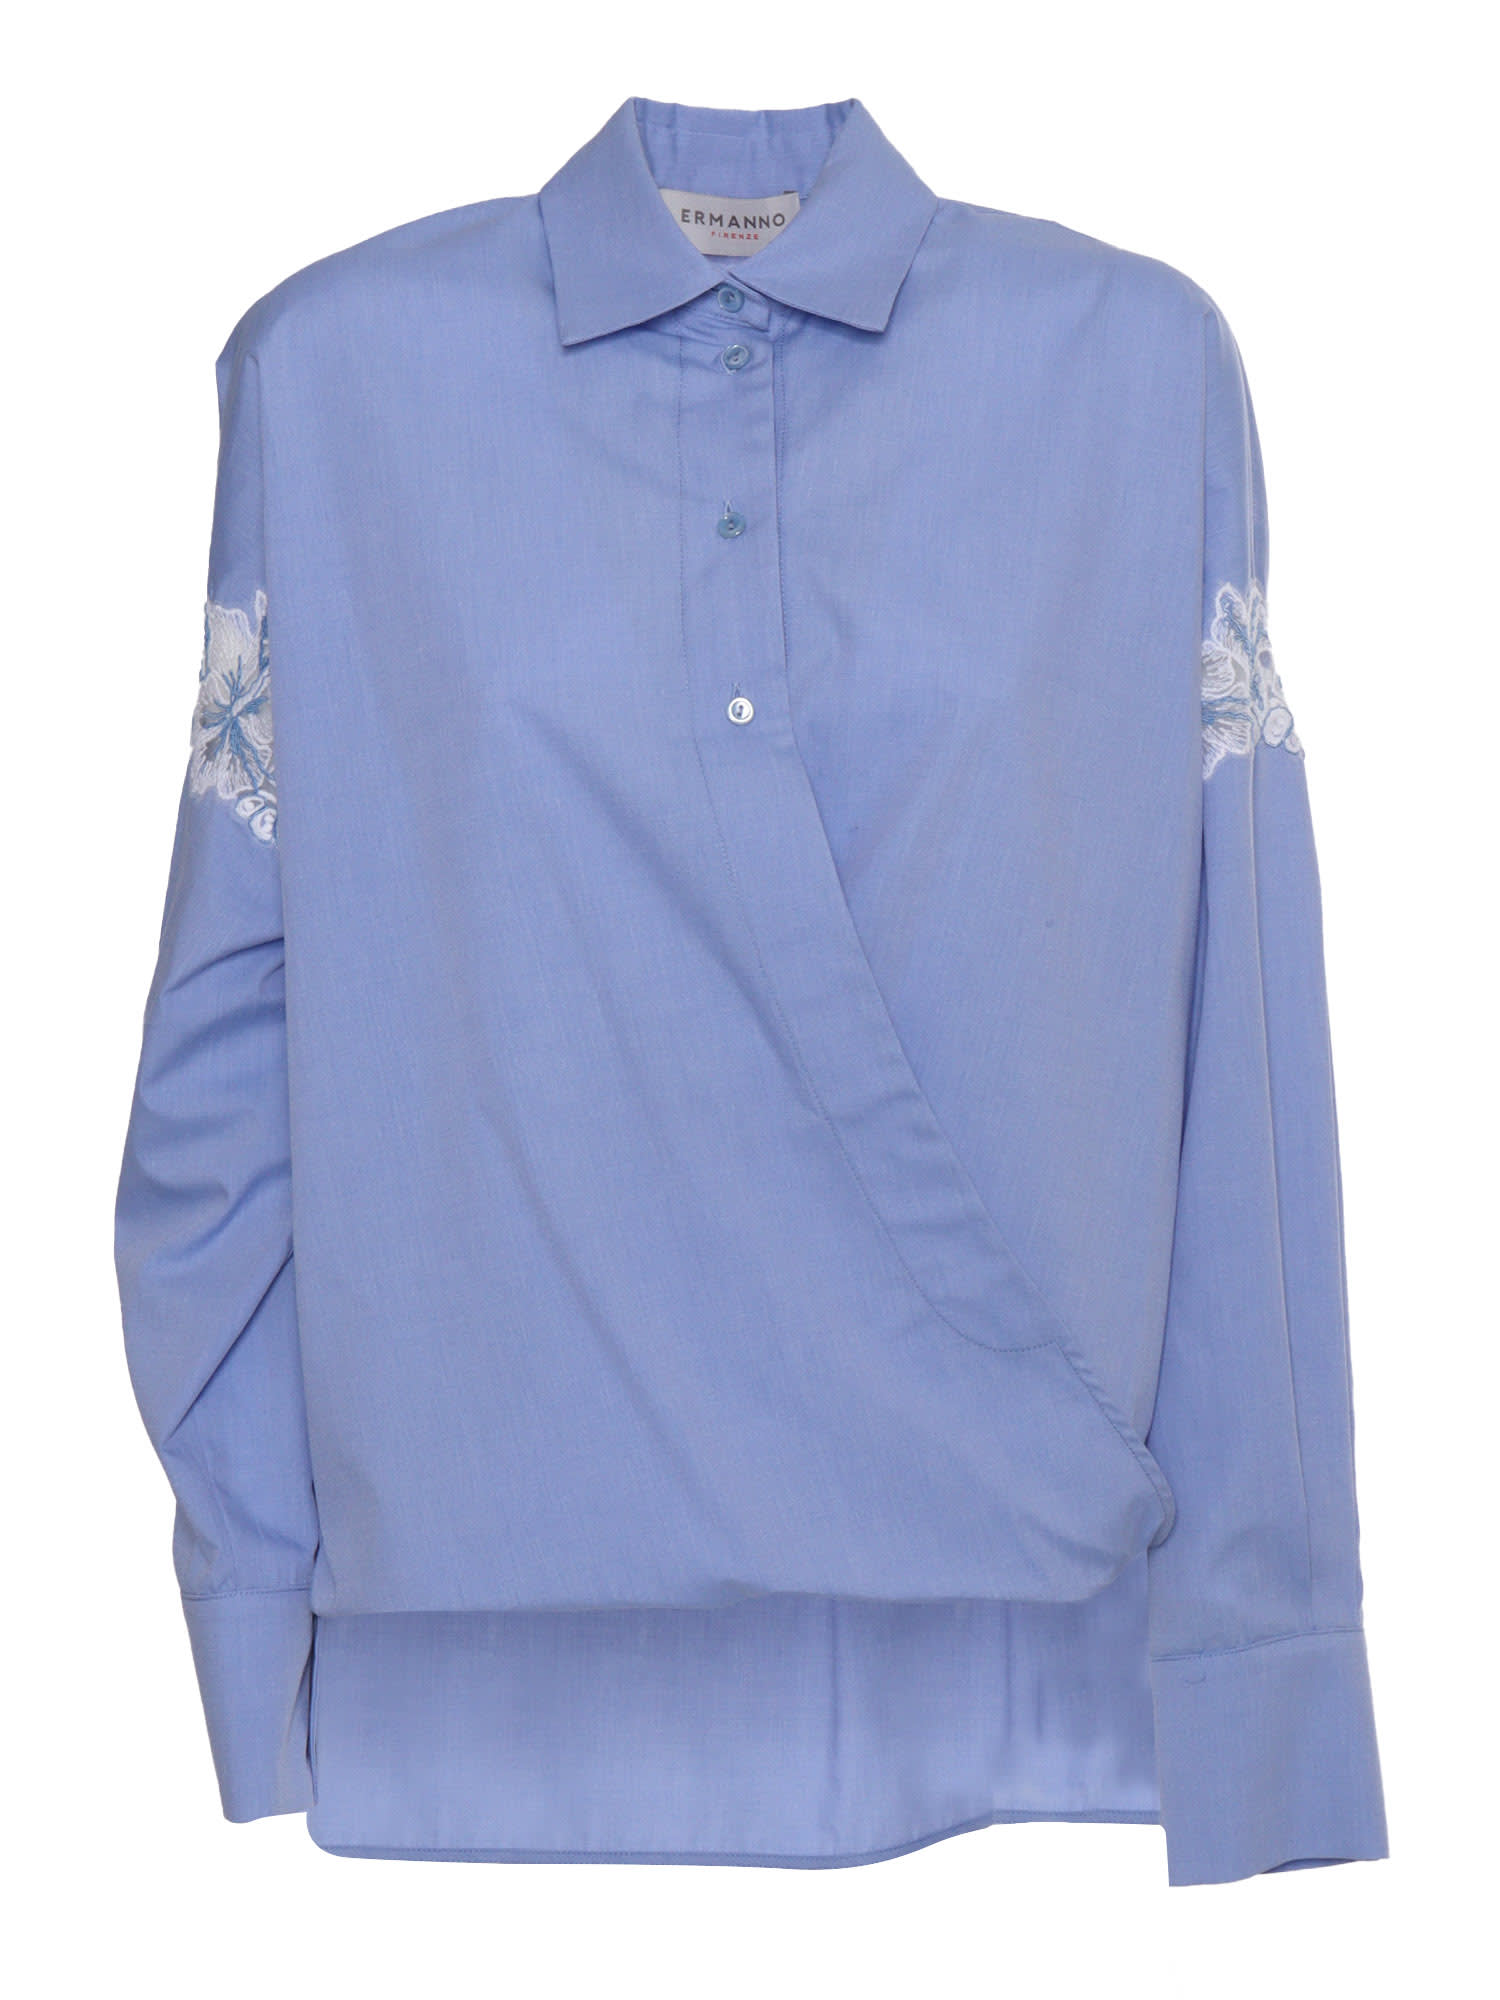 Ermanno Ermanno Scervino Light Blue Shirt With Lace